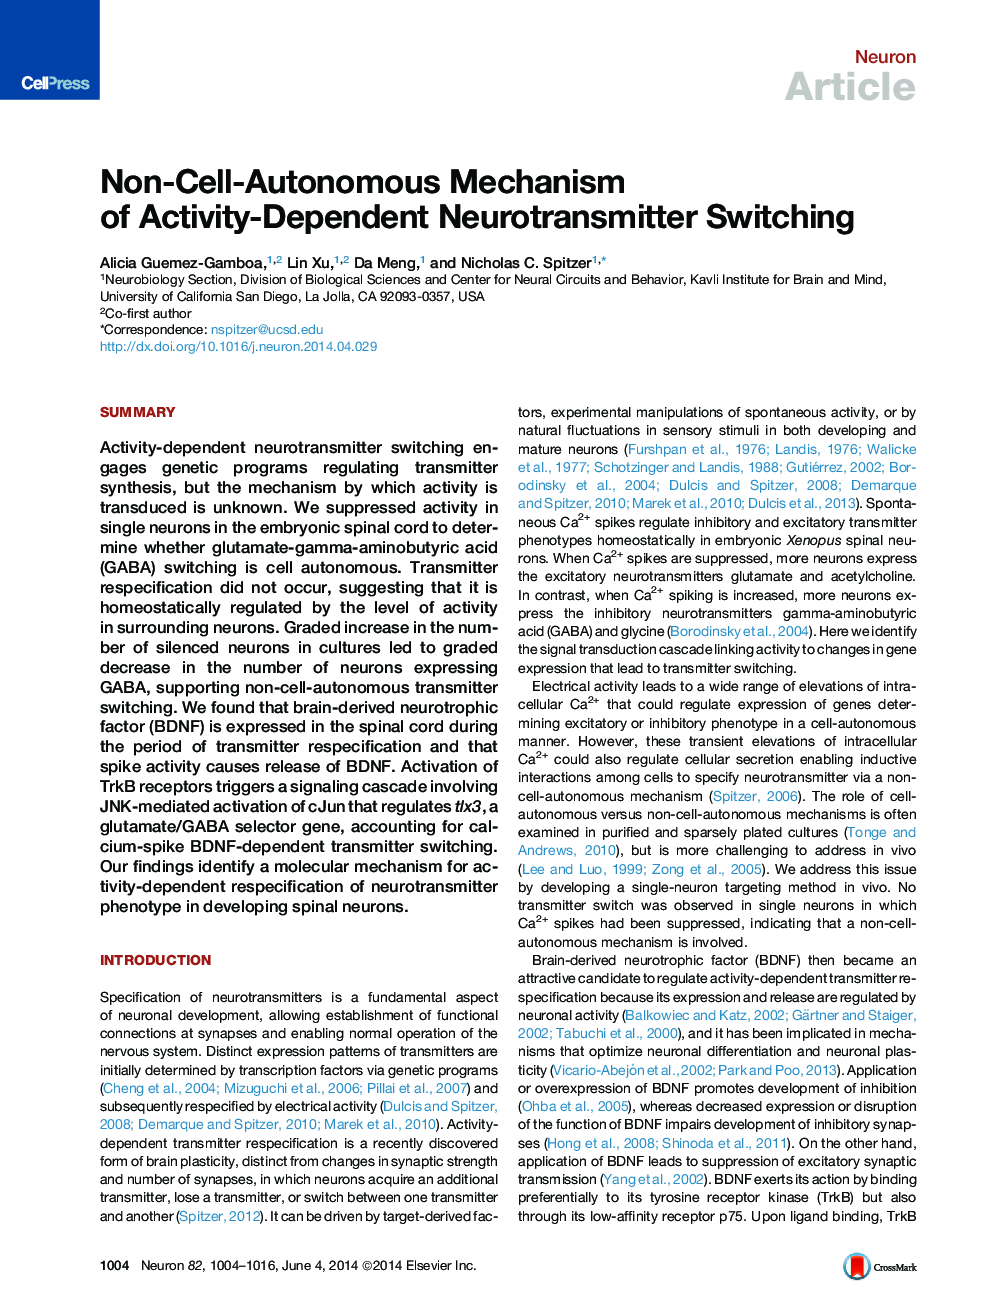 Non-Cell-Autonomous Mechanism of Activity-Dependent Neurotransmitter Switching